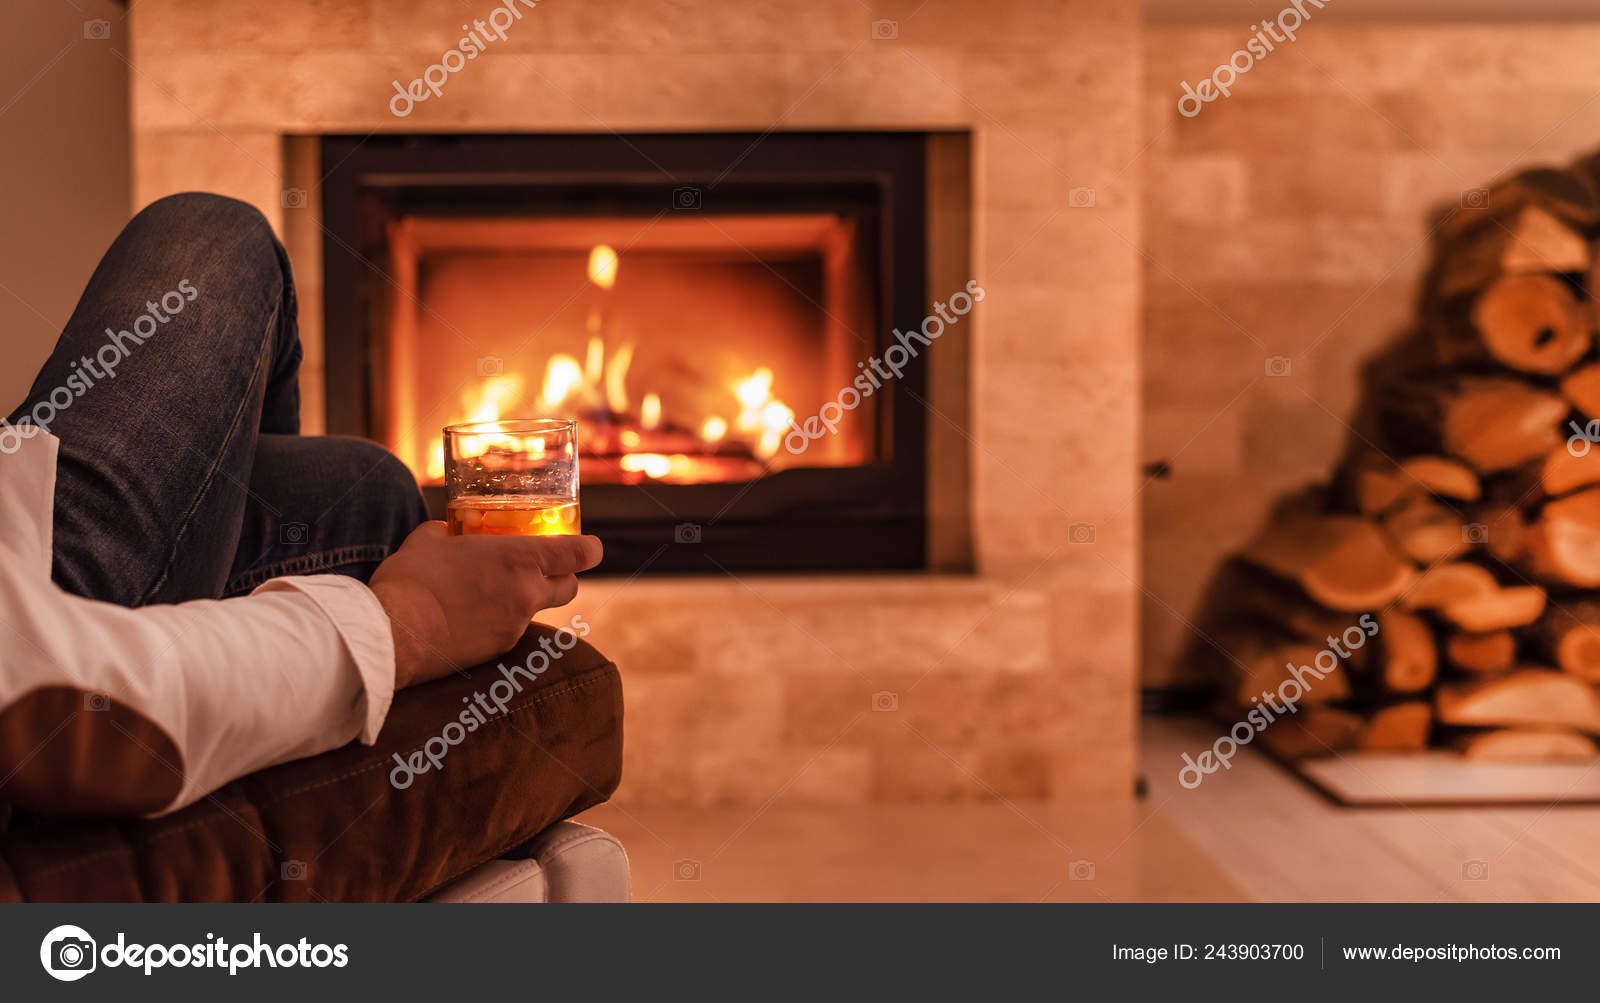 Expresa tu momento " in situ " con una imagen - Página 36 Depositphotos_243903700-stock-photo-man-sitting-home-fireplace-drinking